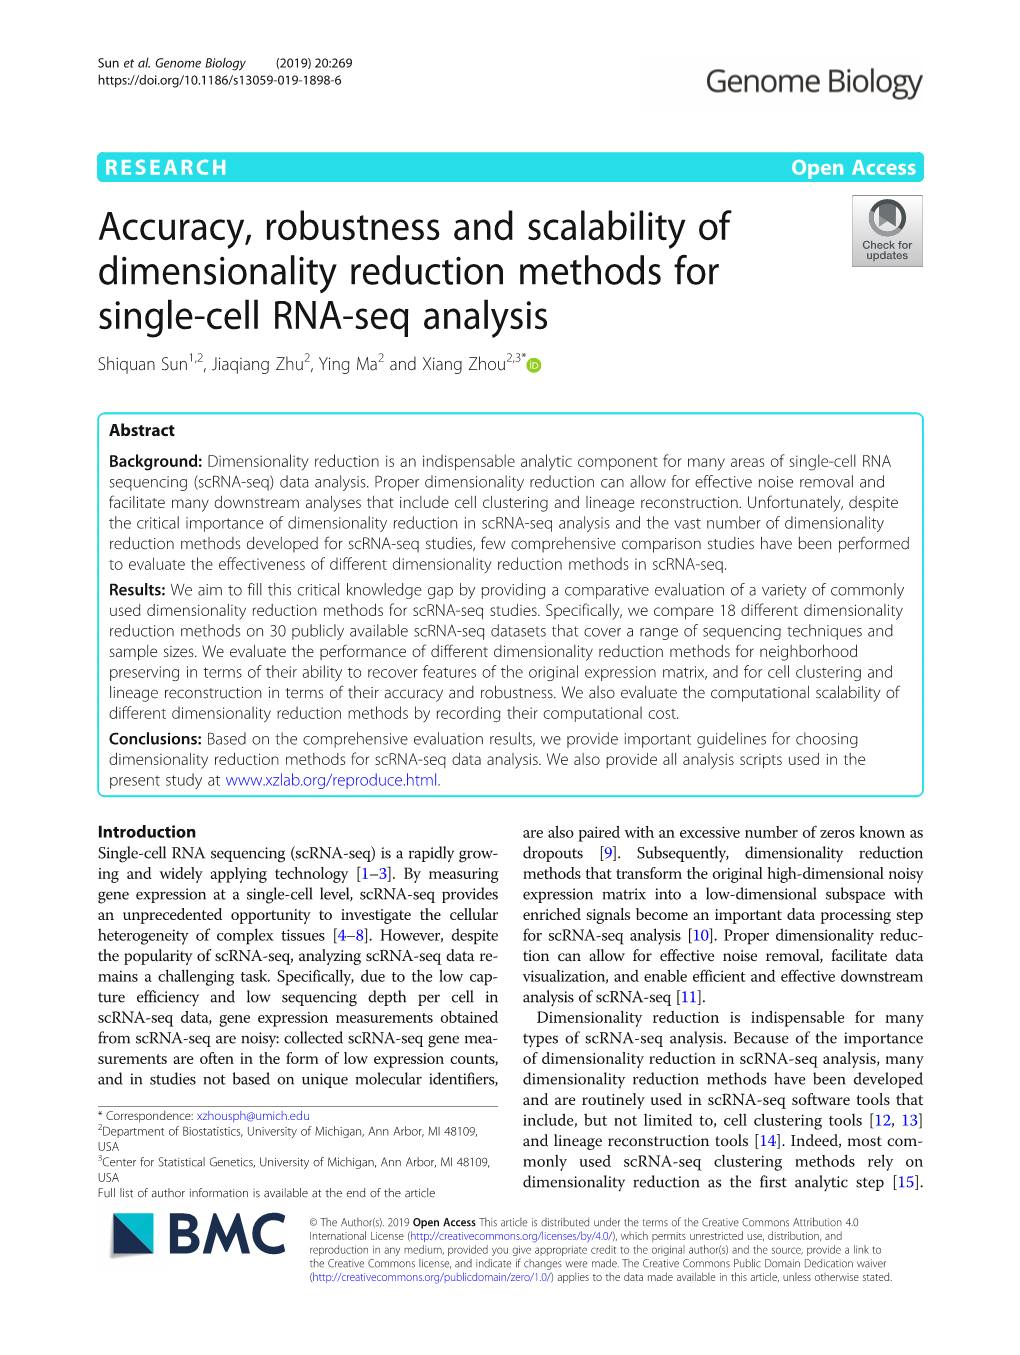 Accuracy, Robustness and Scalability of Dimensionality Reduction Methods for Single-Cell RNA-Seq Analysis Shiquan Sun1,2, Jiaqiang Zhu2, Ying Ma2 and Xiang Zhou2,3*